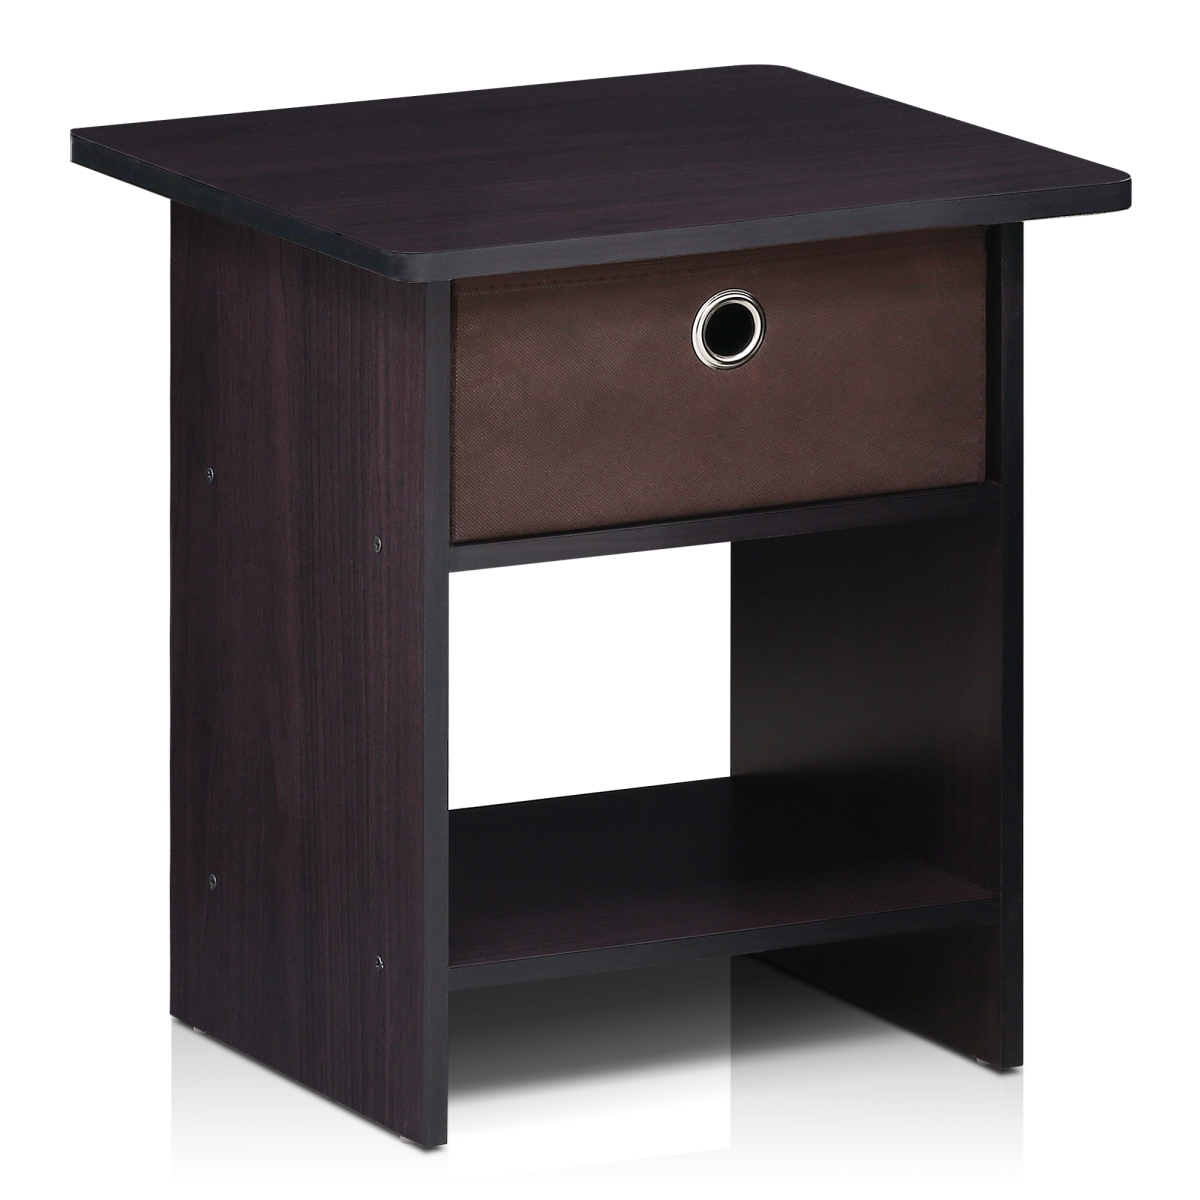 Picture of Furinno 10004DWN End Table & Night Stand Storage Shelf with Bin Drawer, Dark Walnut